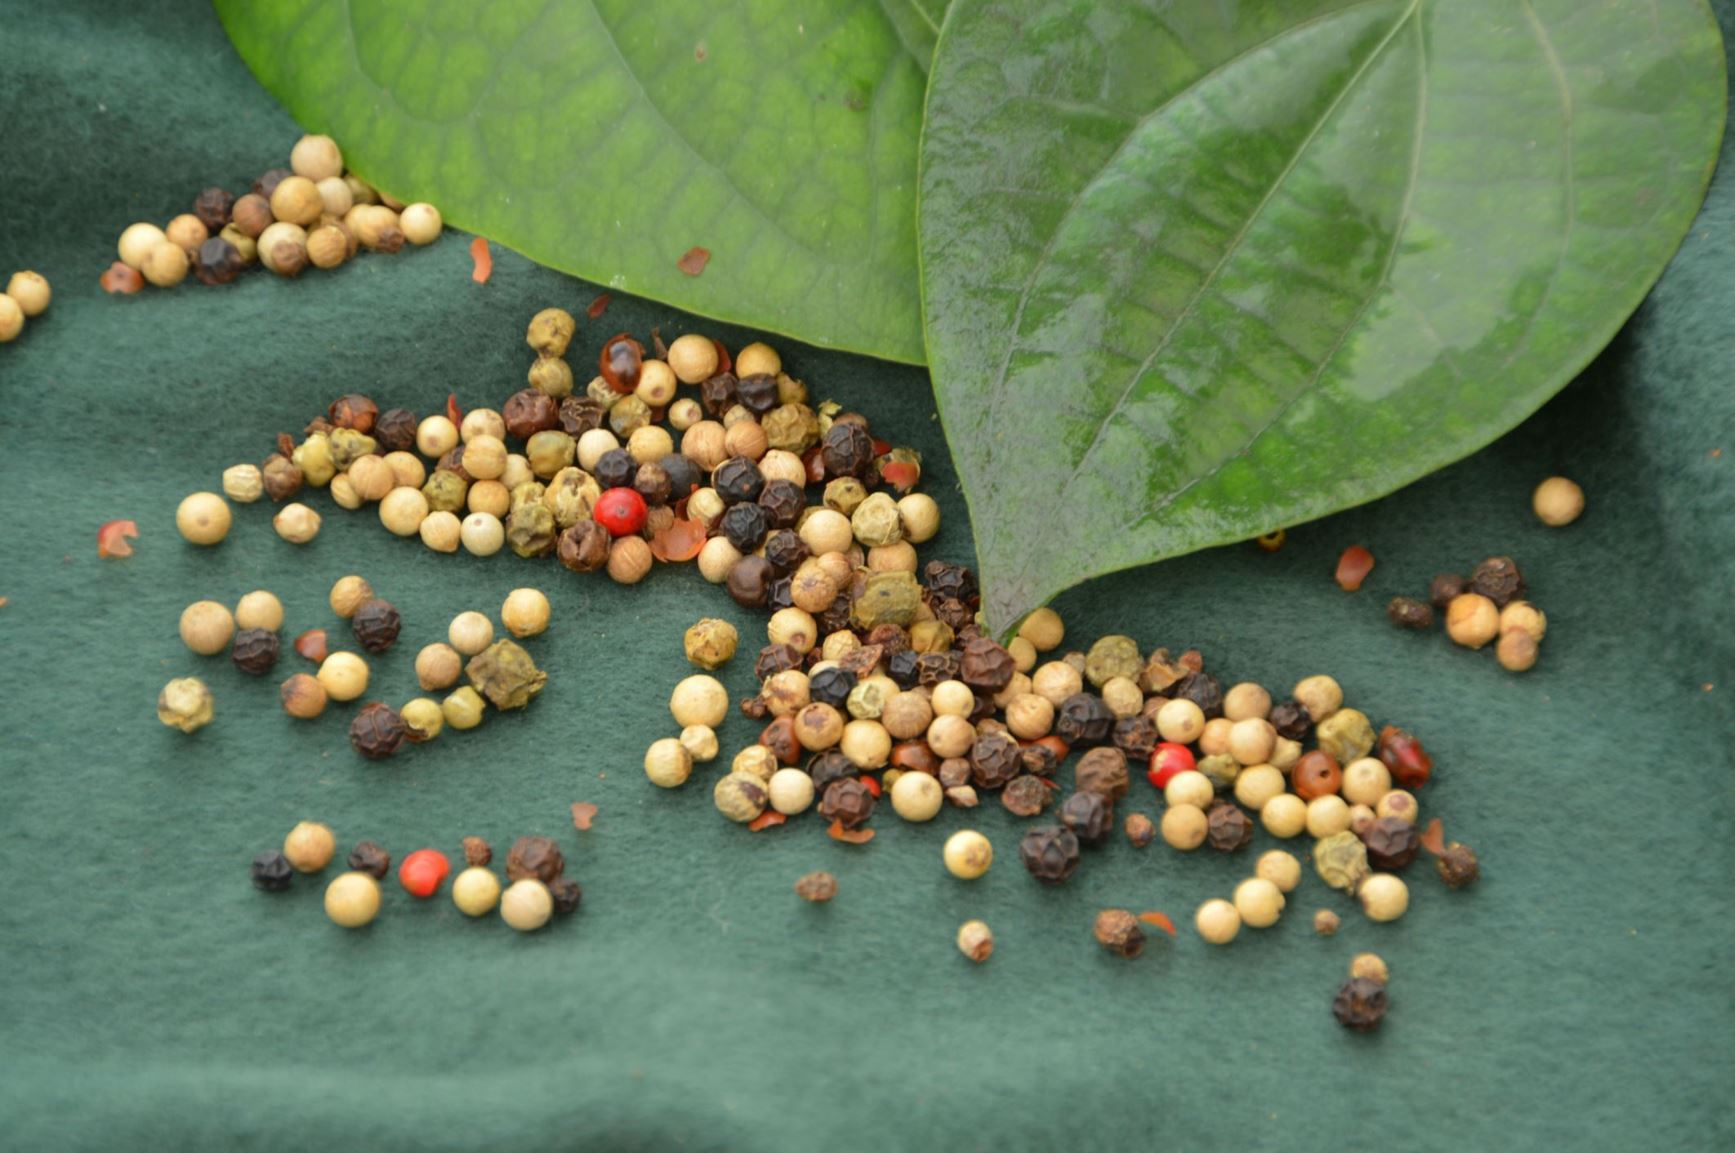 Piper nigrum - Peper, Common pepper, Pepper plant, hujiao, 胡椒